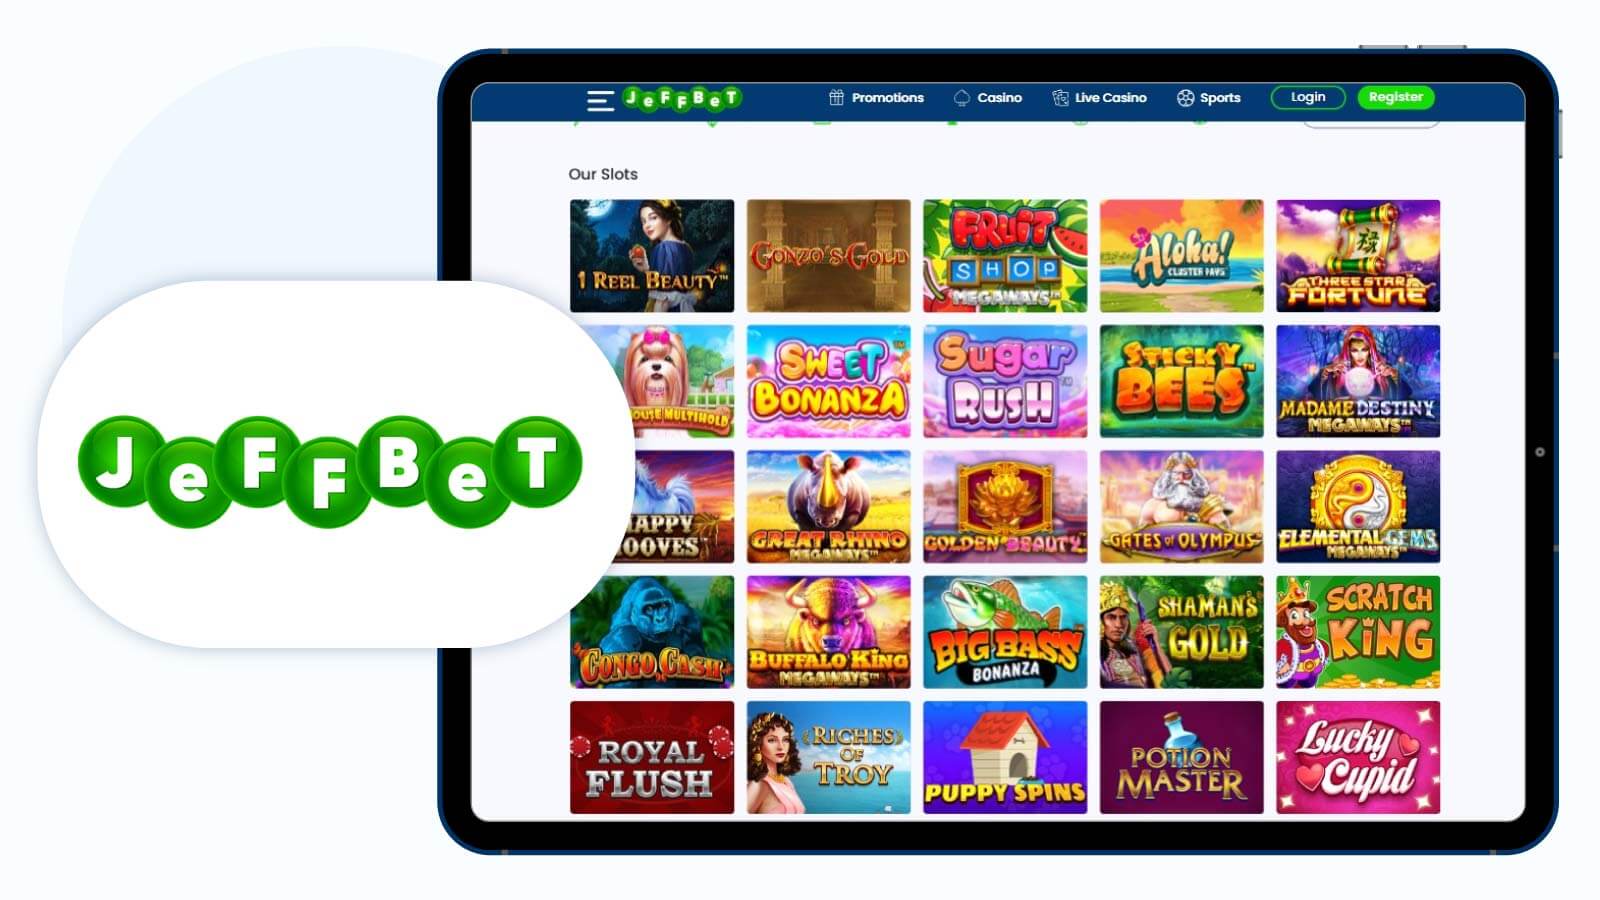 Jeffbet-Casino-Fastest-Payout-Online-Casino